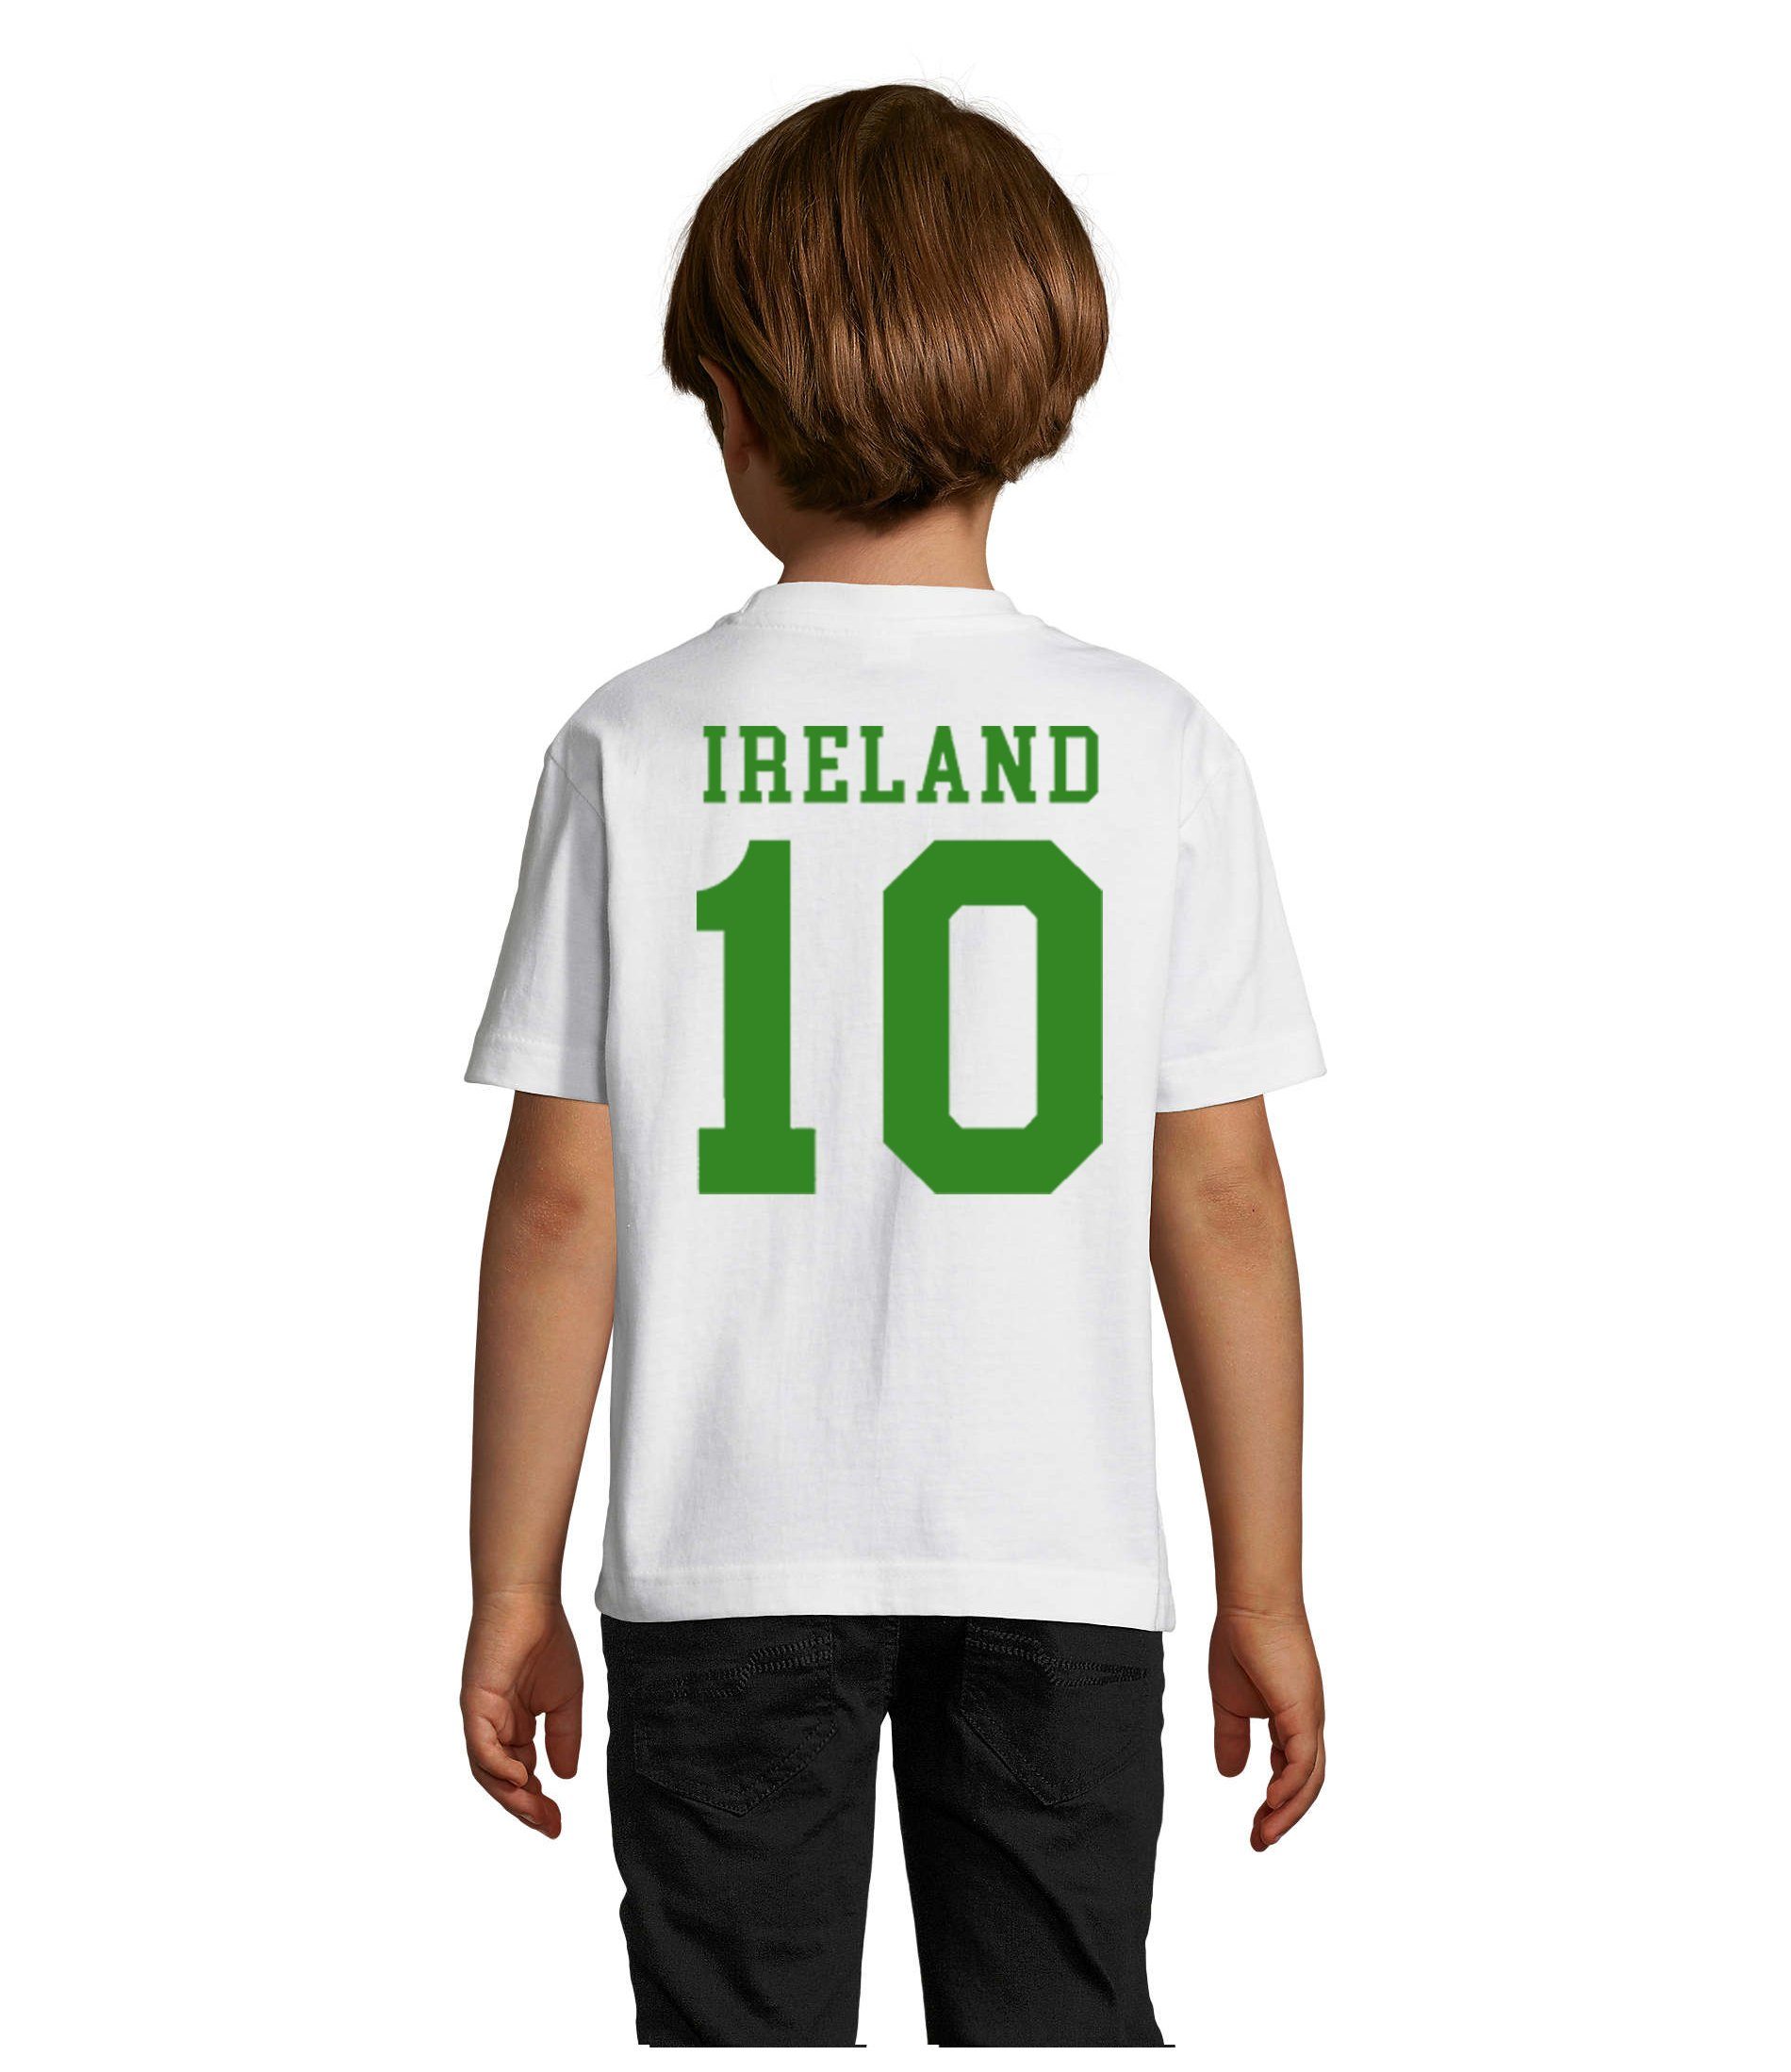 Blondie & Brownie EM Handball Grün/Weiss Fußball T-Shirt Trikot Kinder Sport WM Weltmeister Irland